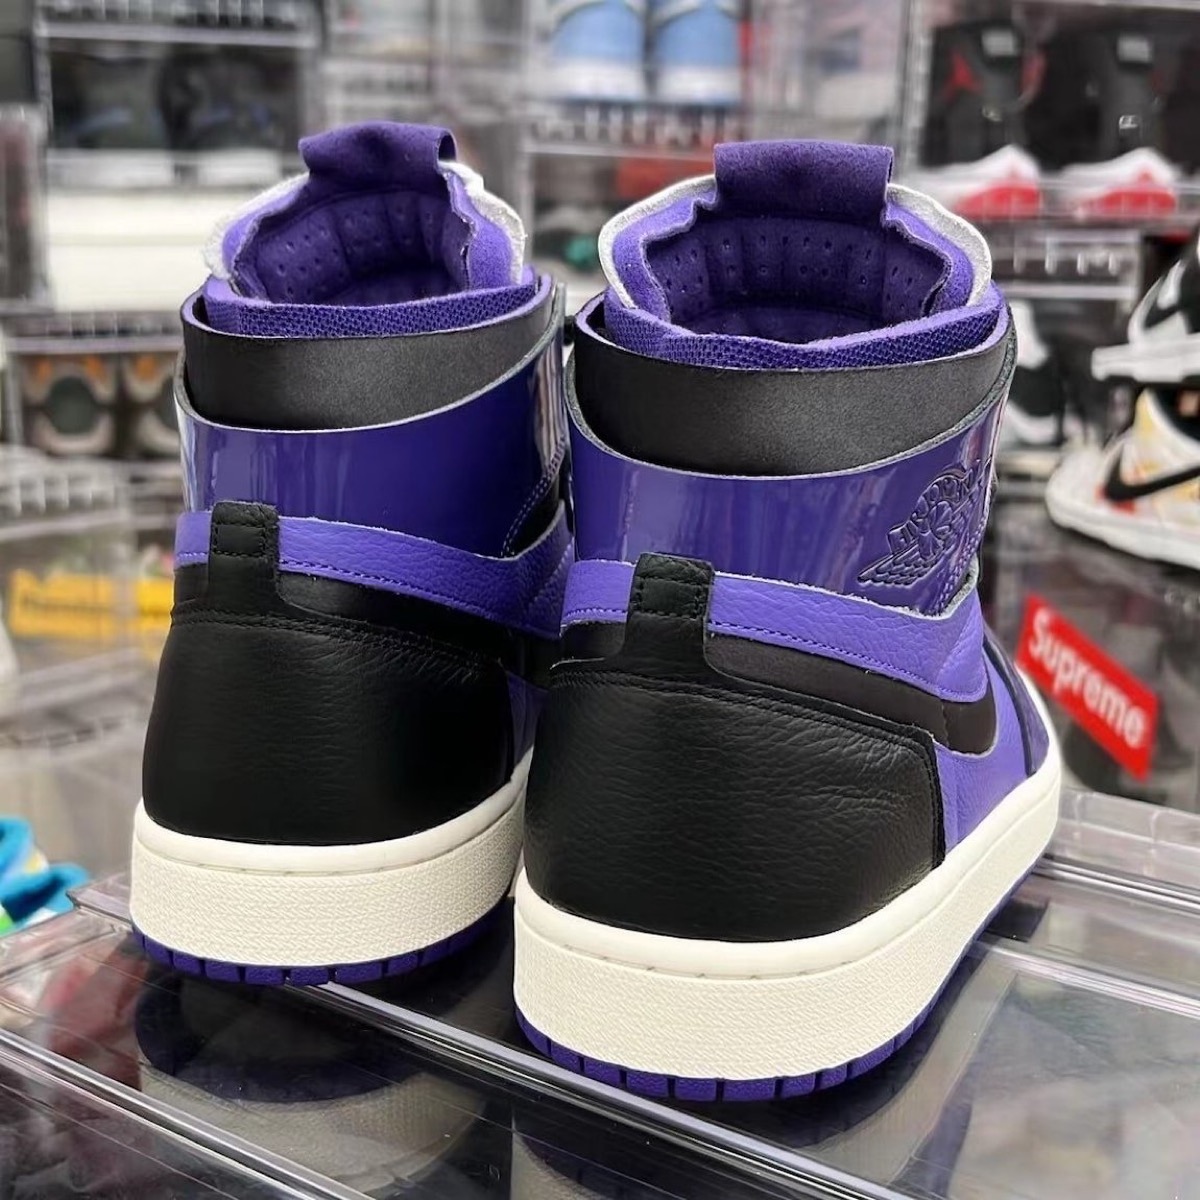 Nike Wmns Air Jordan 1 Zoom Air Cmft Purple Patent が2月27日より発売予定 Up To Date